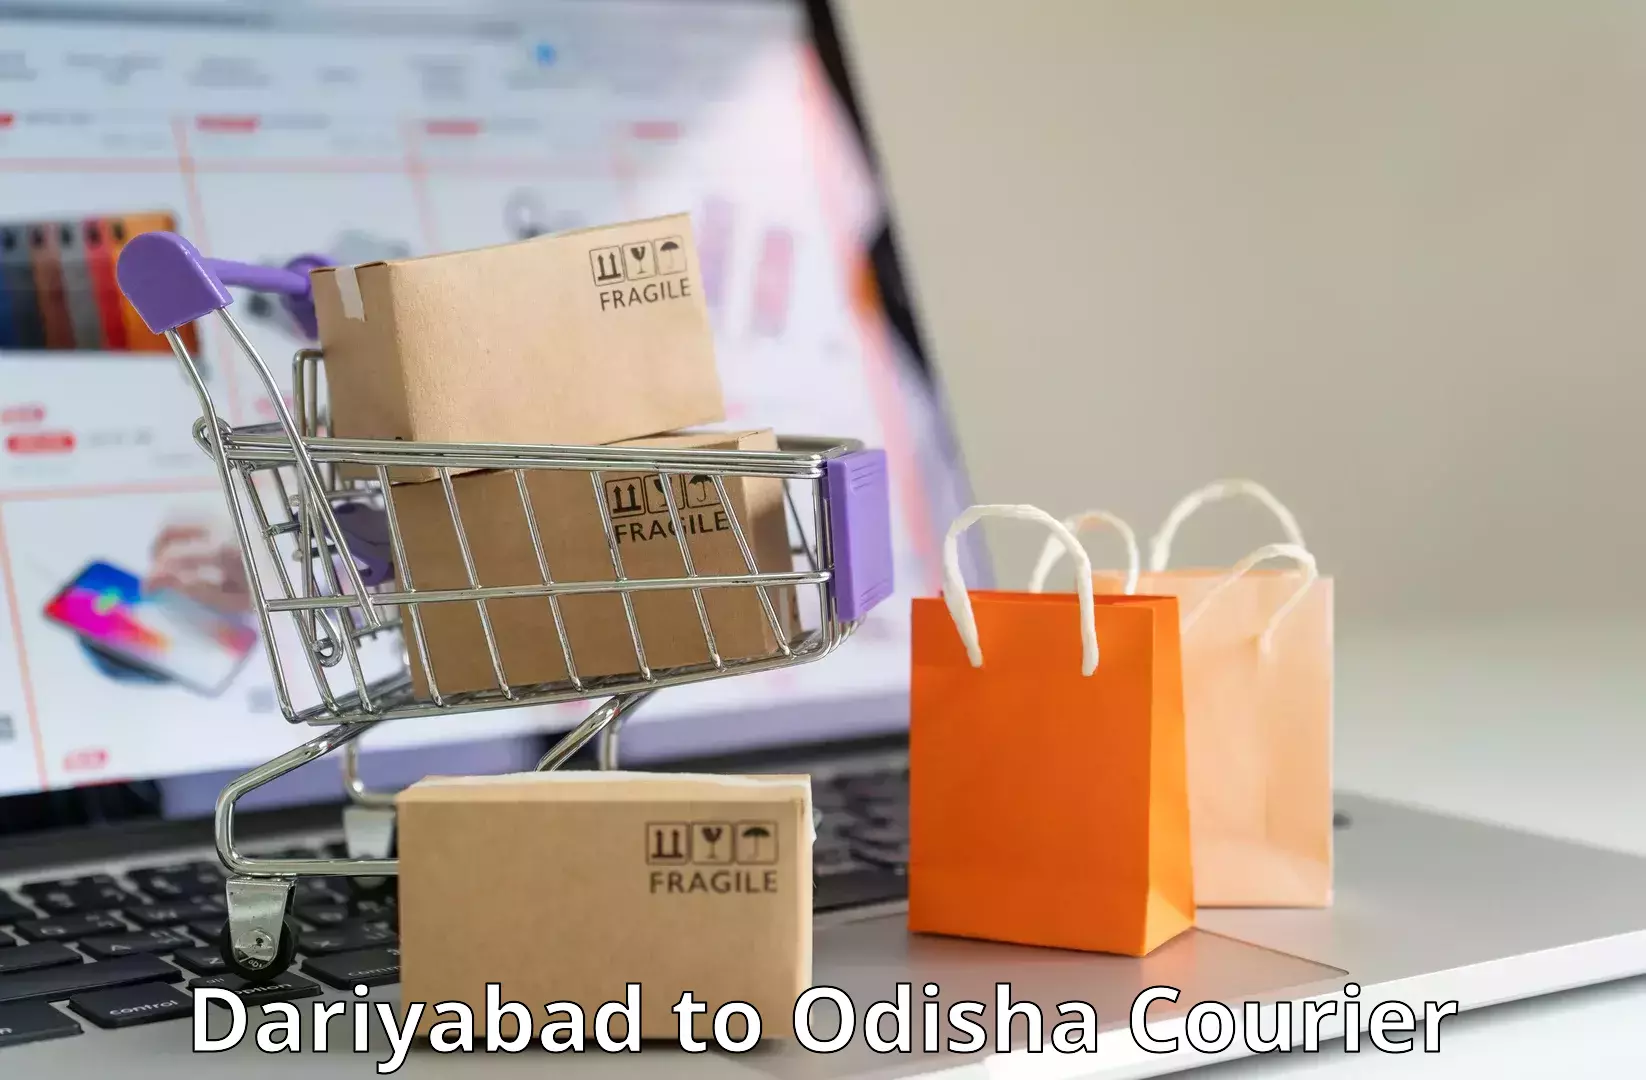 Modern delivery methods Dariyabad to Balikuda